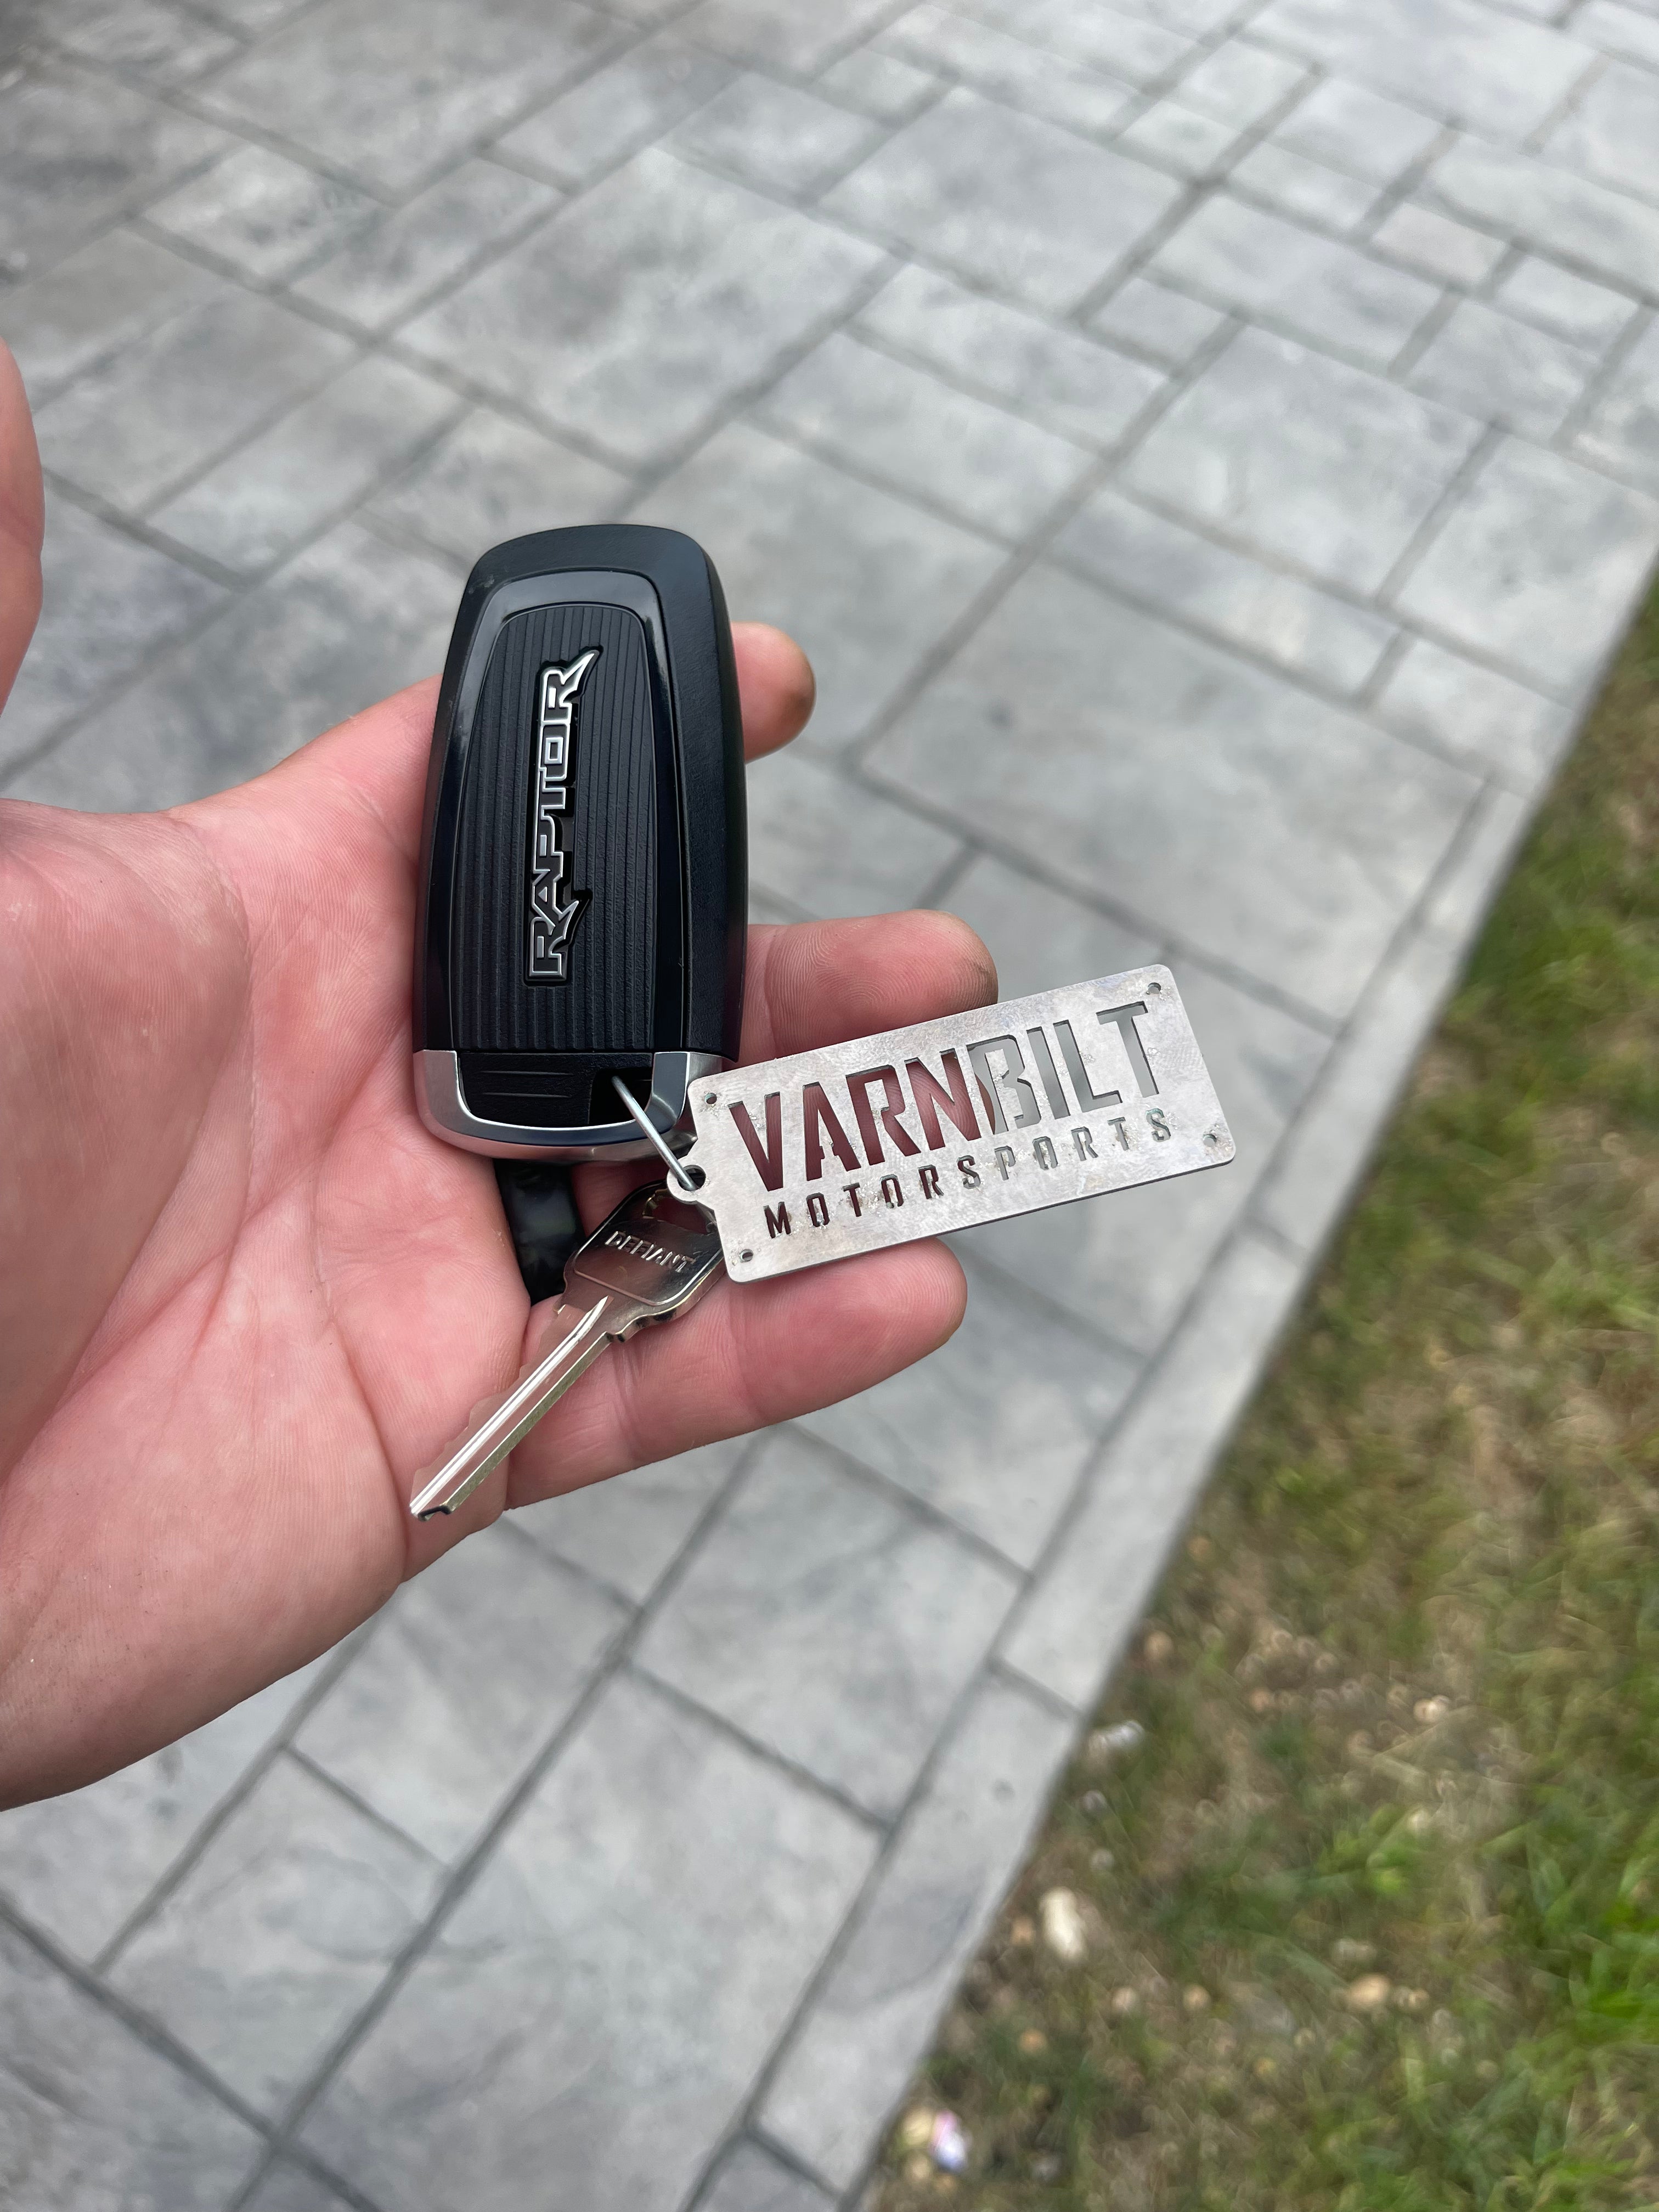 Varnbilt titanium keychain – VARNBILT MOTORSPORTS